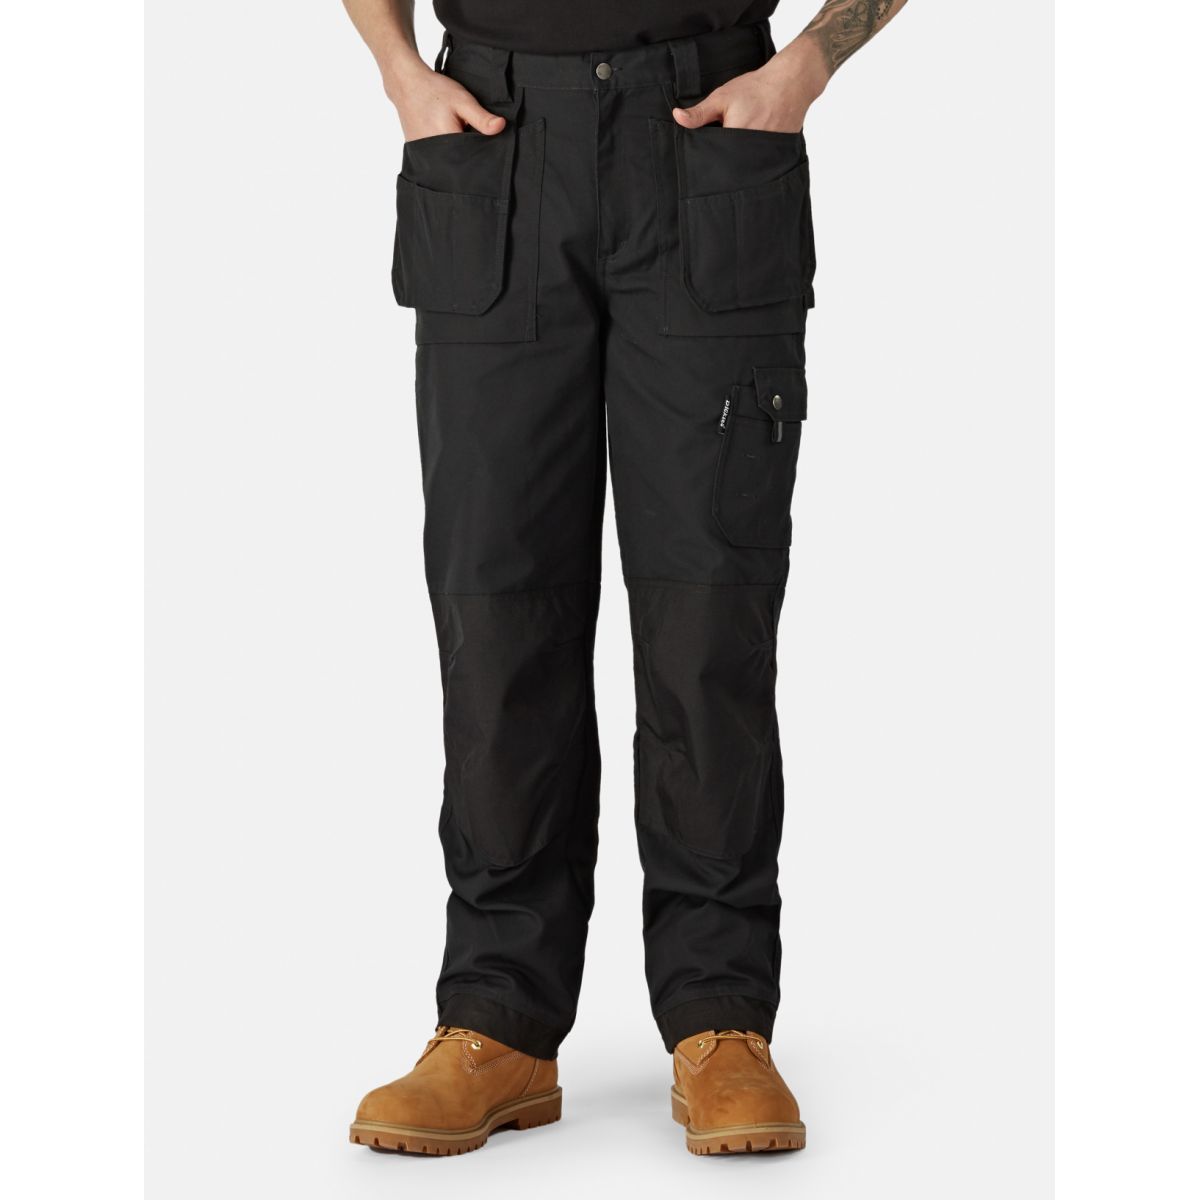 Pantalon Eisenhower multi-poches Noir - Dickies - Taille 48 0